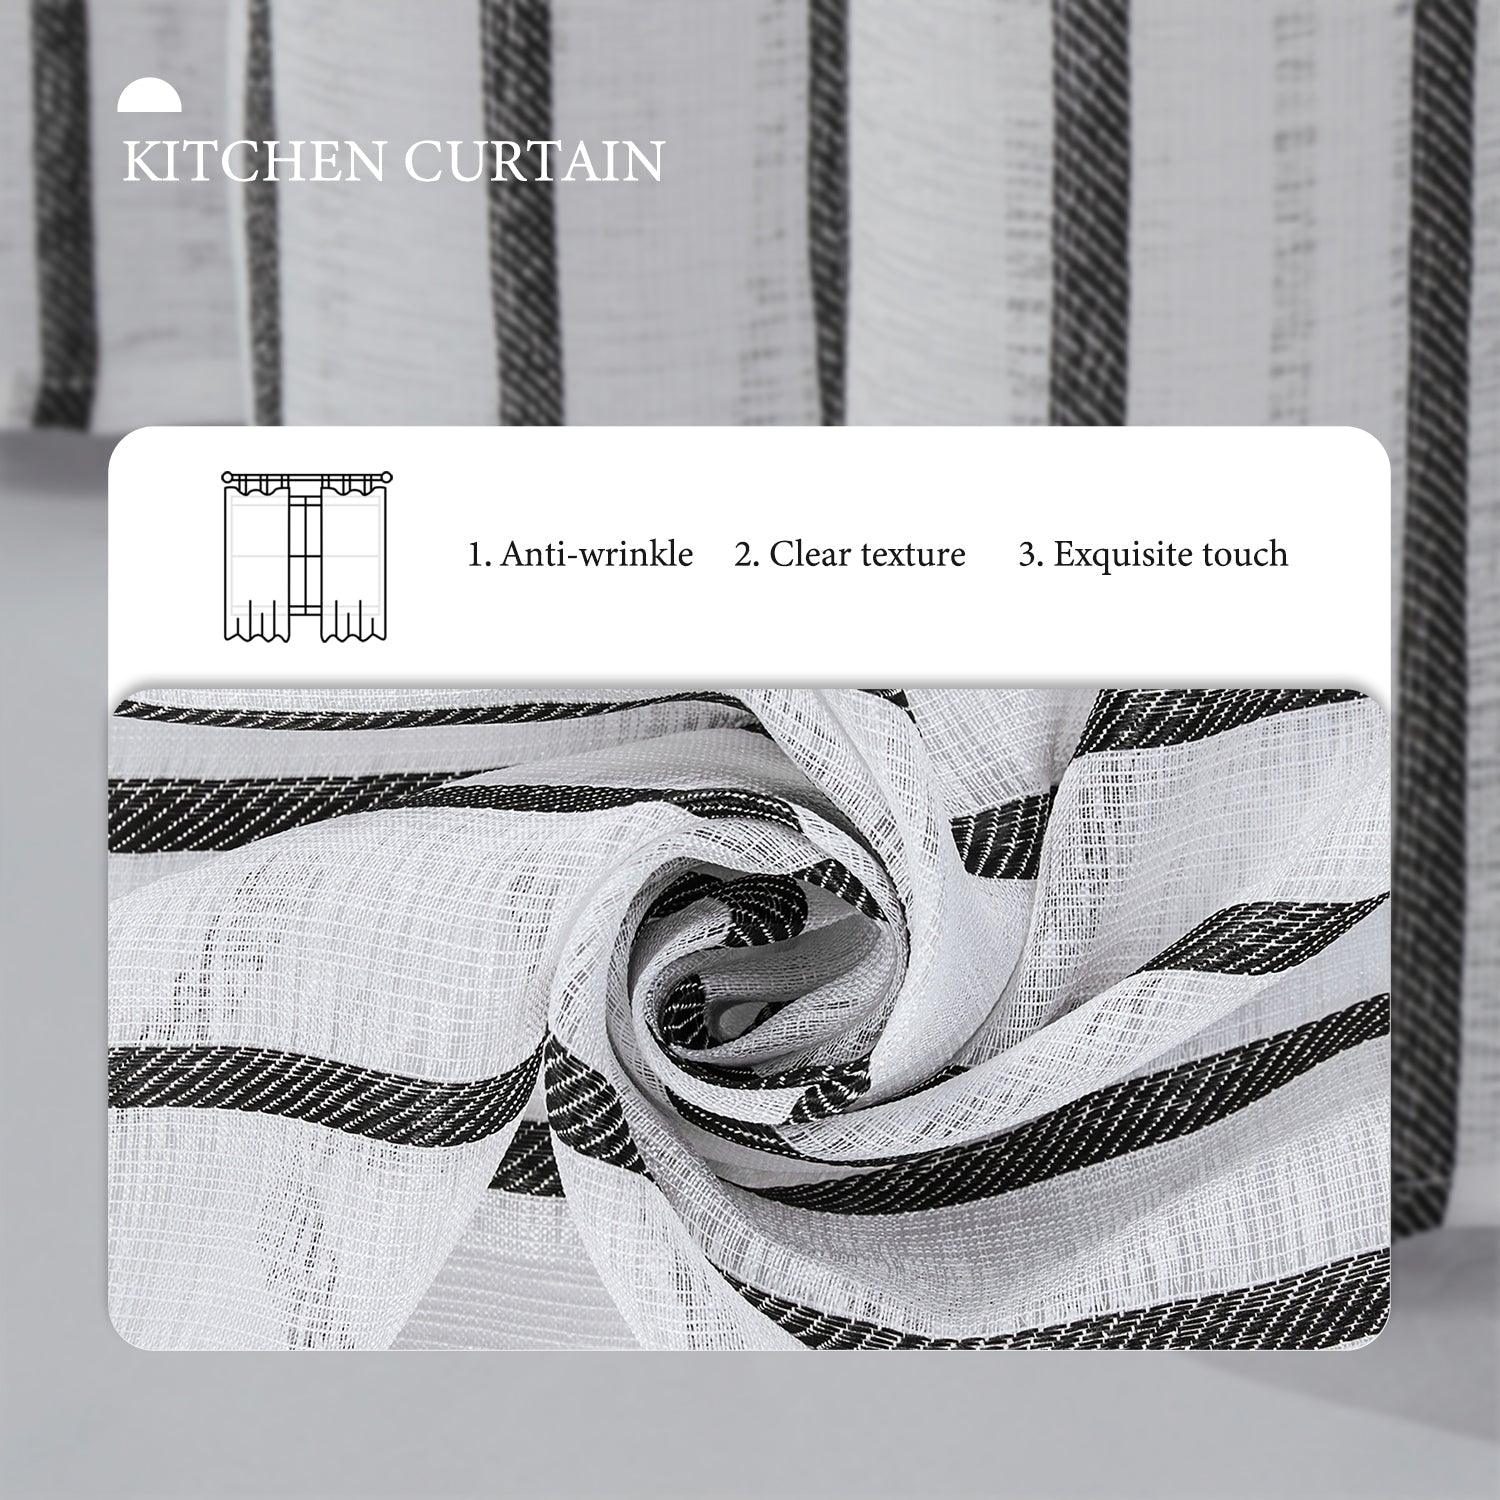 Topfinel Pleated Ticking Striped Tiers Curtains Faux Linen Semi Sheer Kitchen curtains - Topfinel